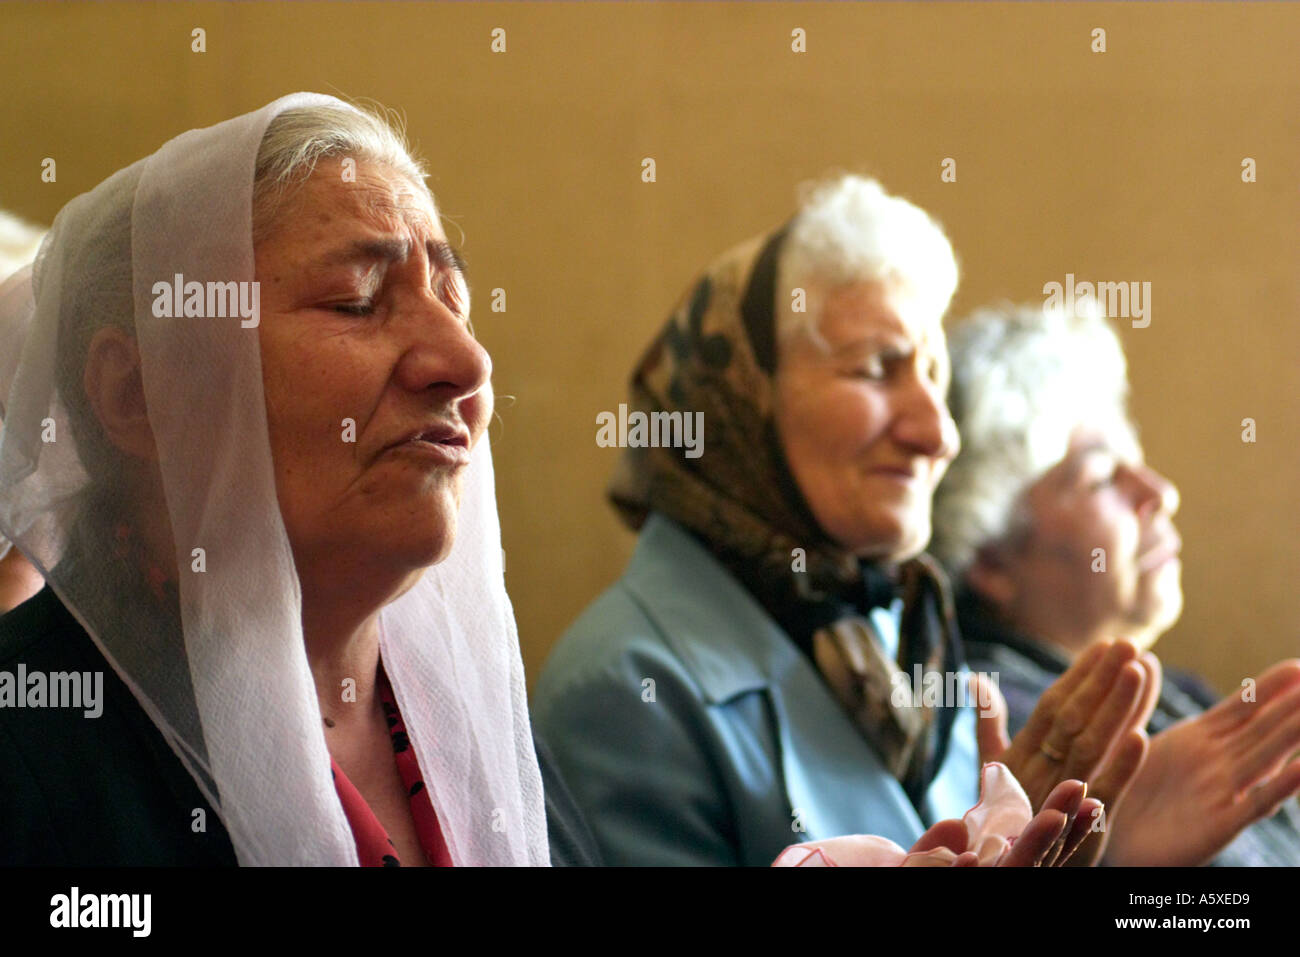 armenia-vanadzor-three-older-women-pray-in-church-with-heads-covered-A5XED9.jpg